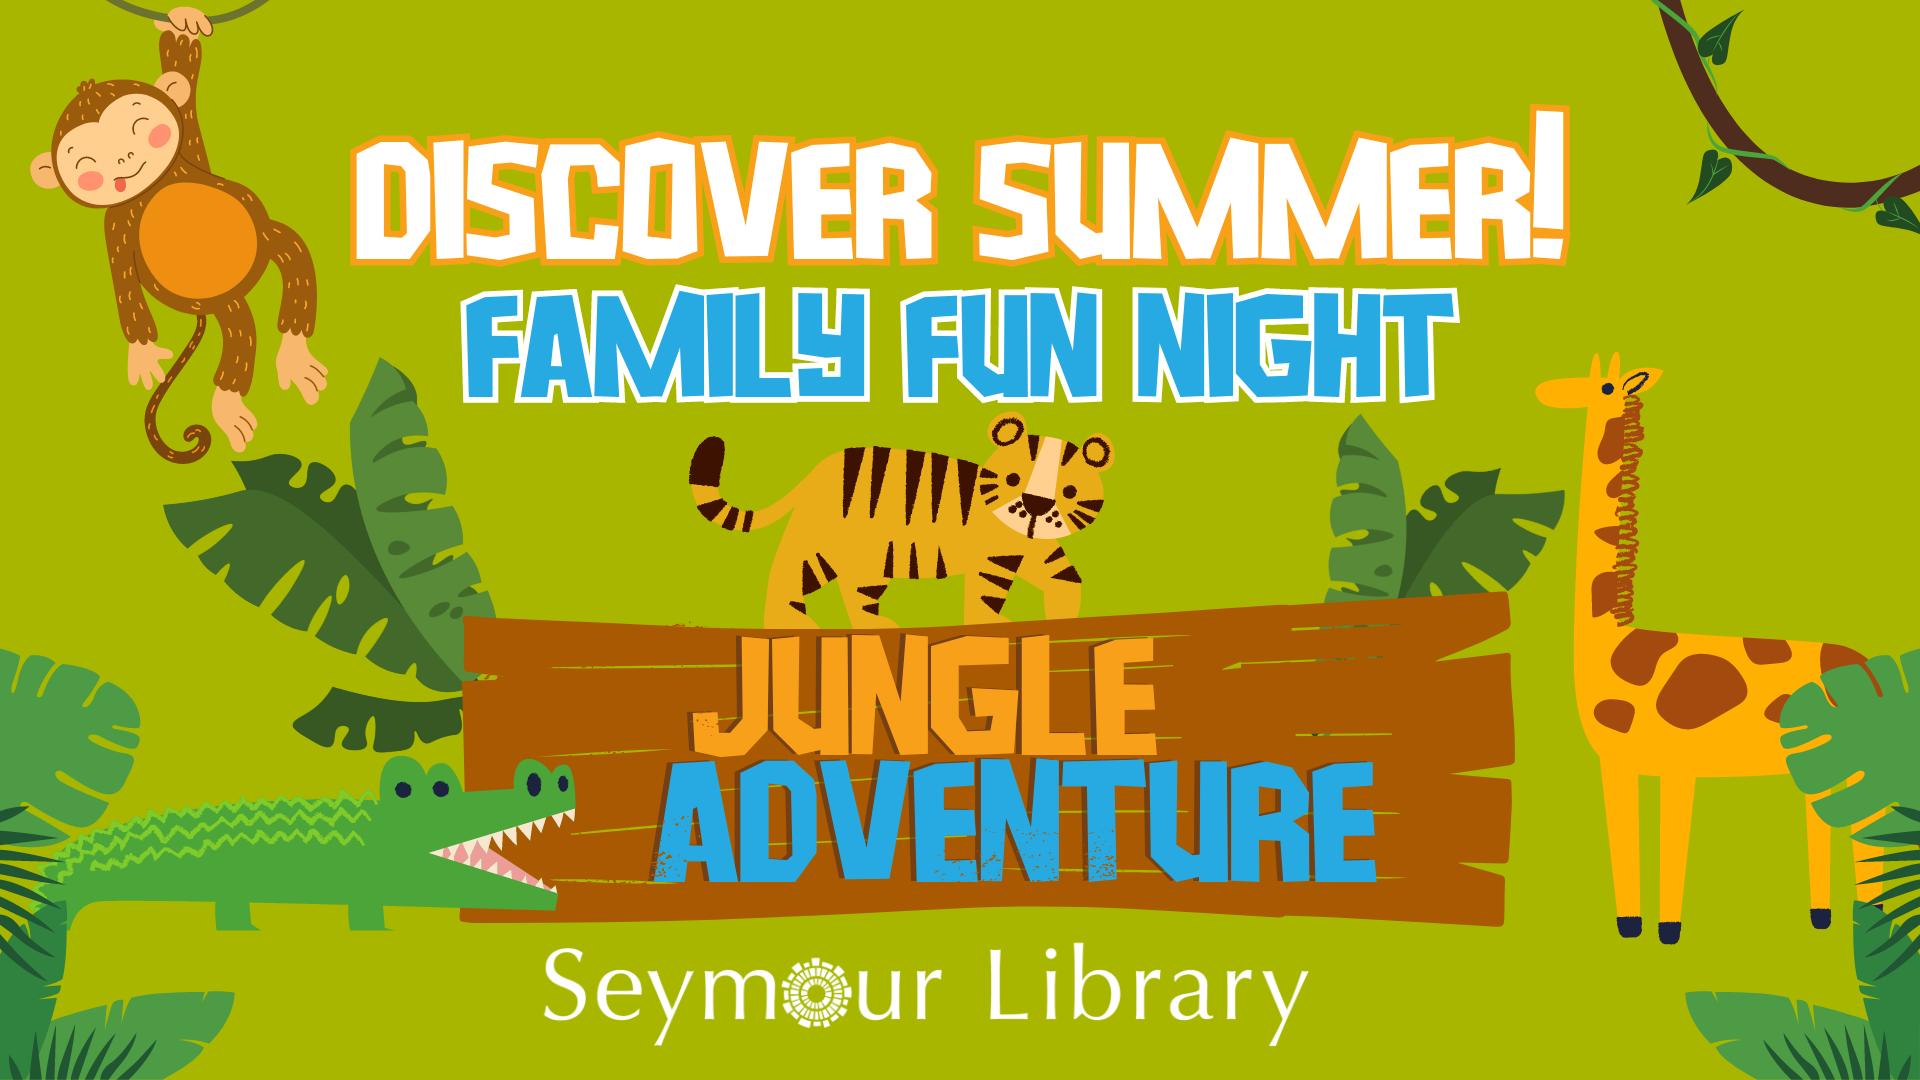 Discover Summer Family Fun Night! Jungle Adventure